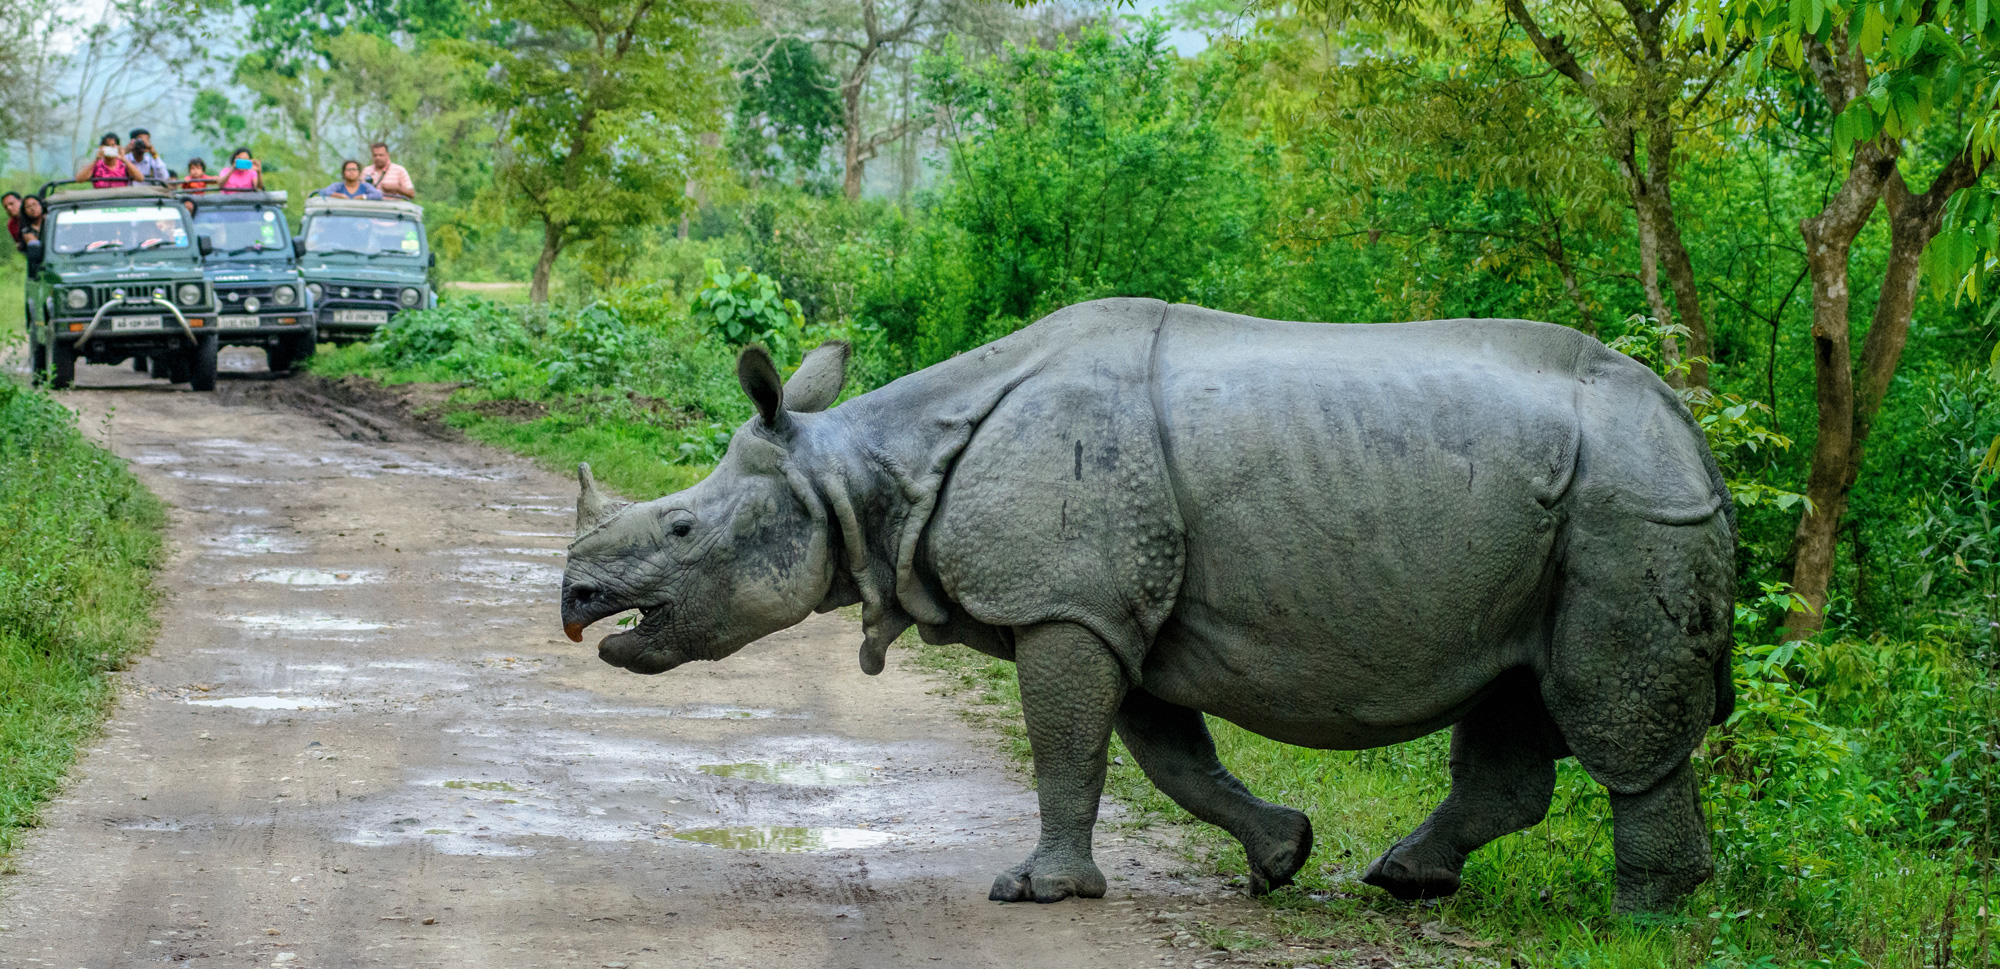 A rhino at Kaziranga National Park.
